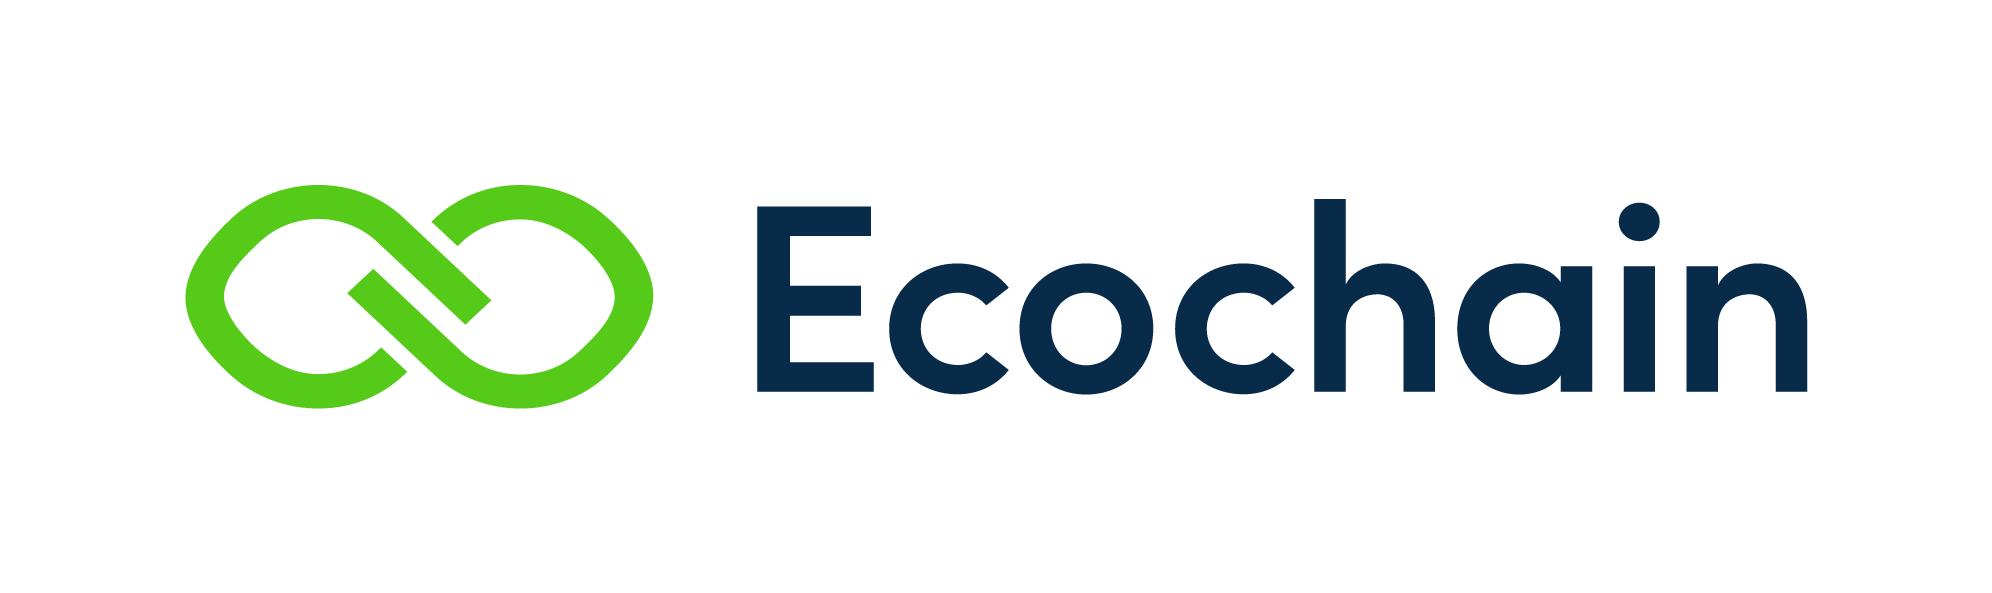 Ecochain-logo.png